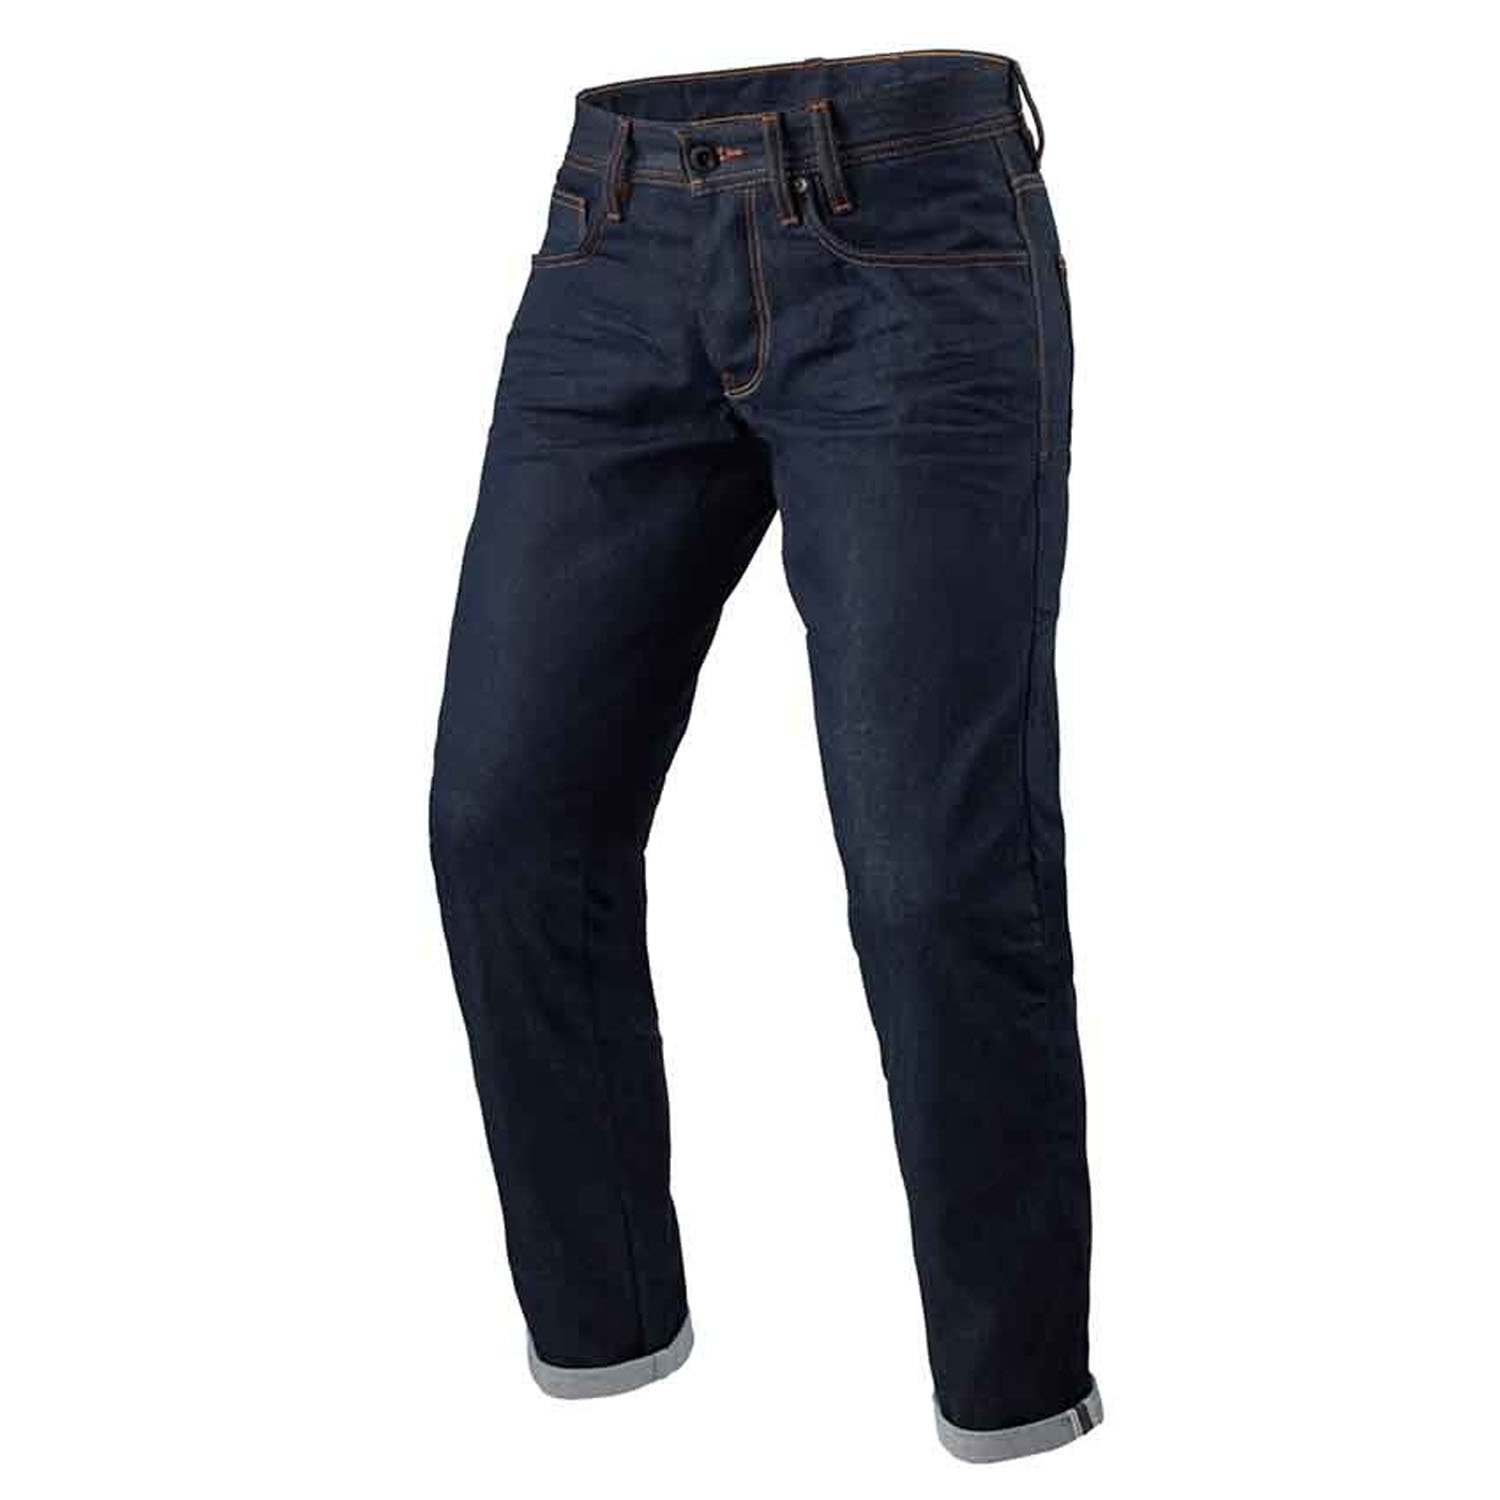 Image of REV'IT! Jeans Lewis Selvedge TF Dark Blue L36 Motorcycle Pants Size L36/W36 EN